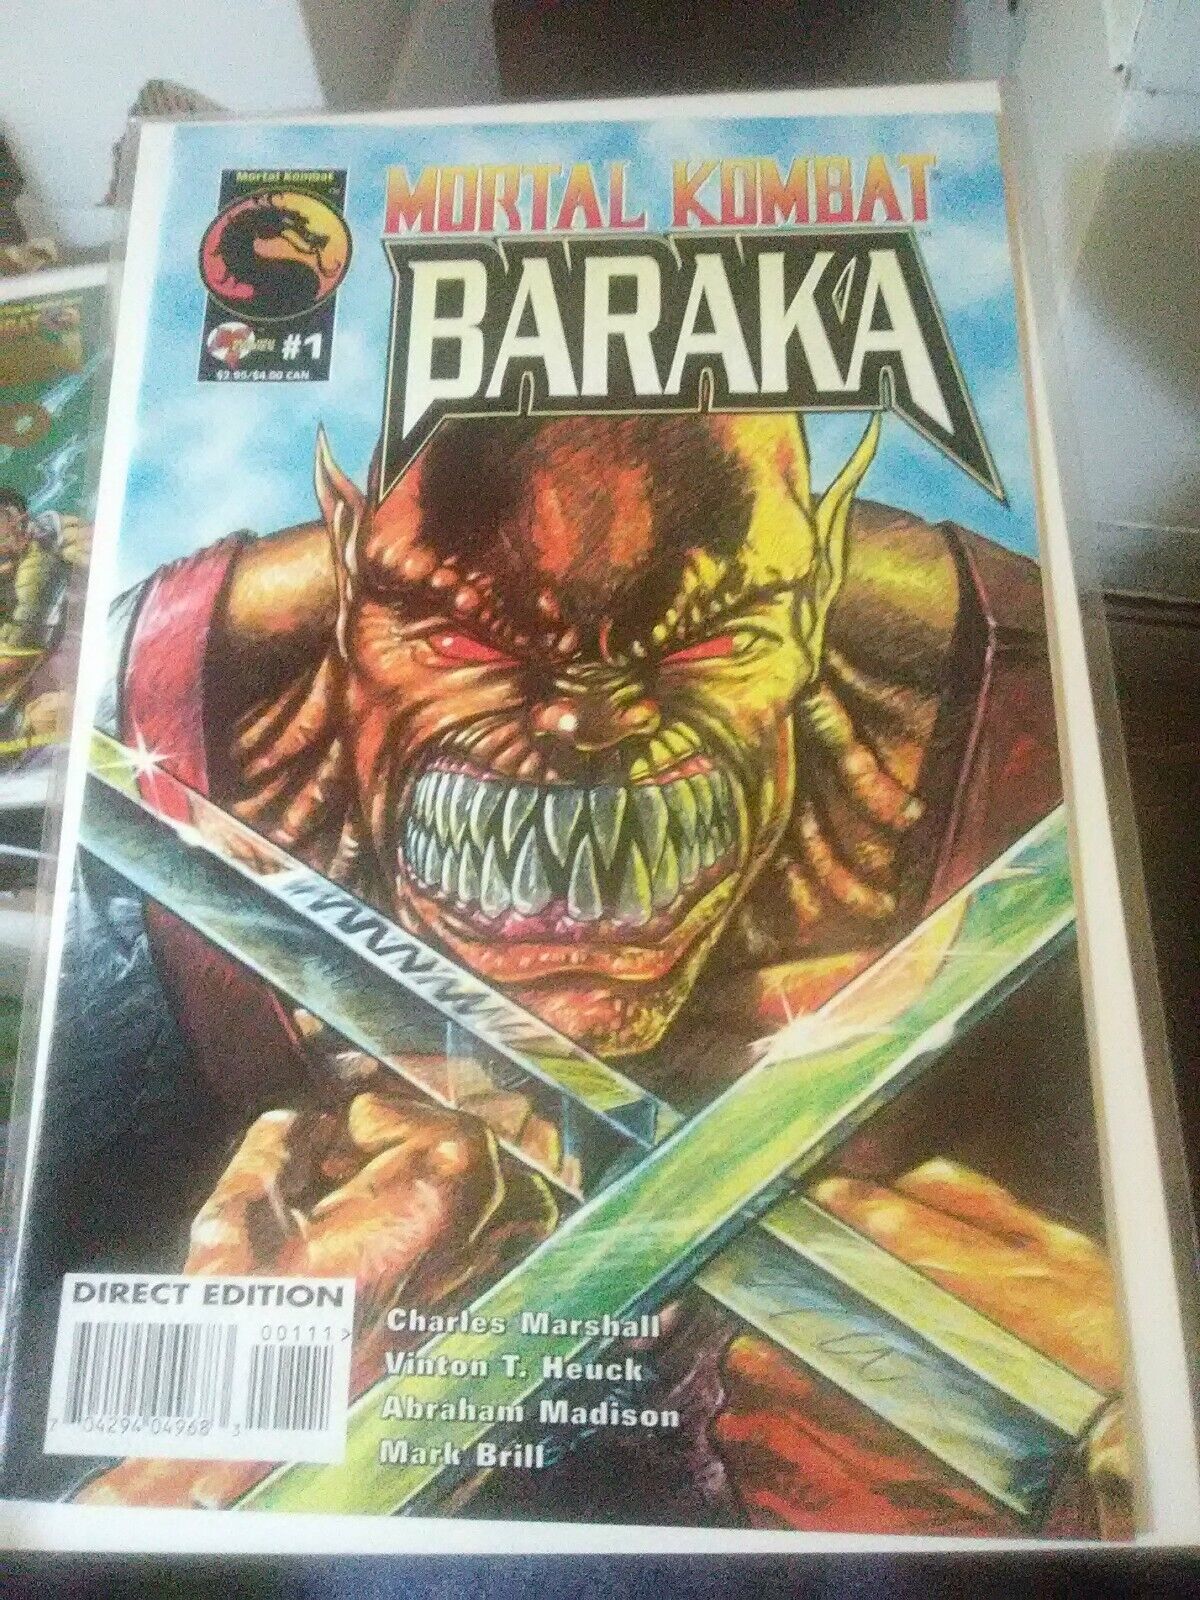 Mortal Kombat:Baraka #1, Direct Edition, 1995, Malibu Comics